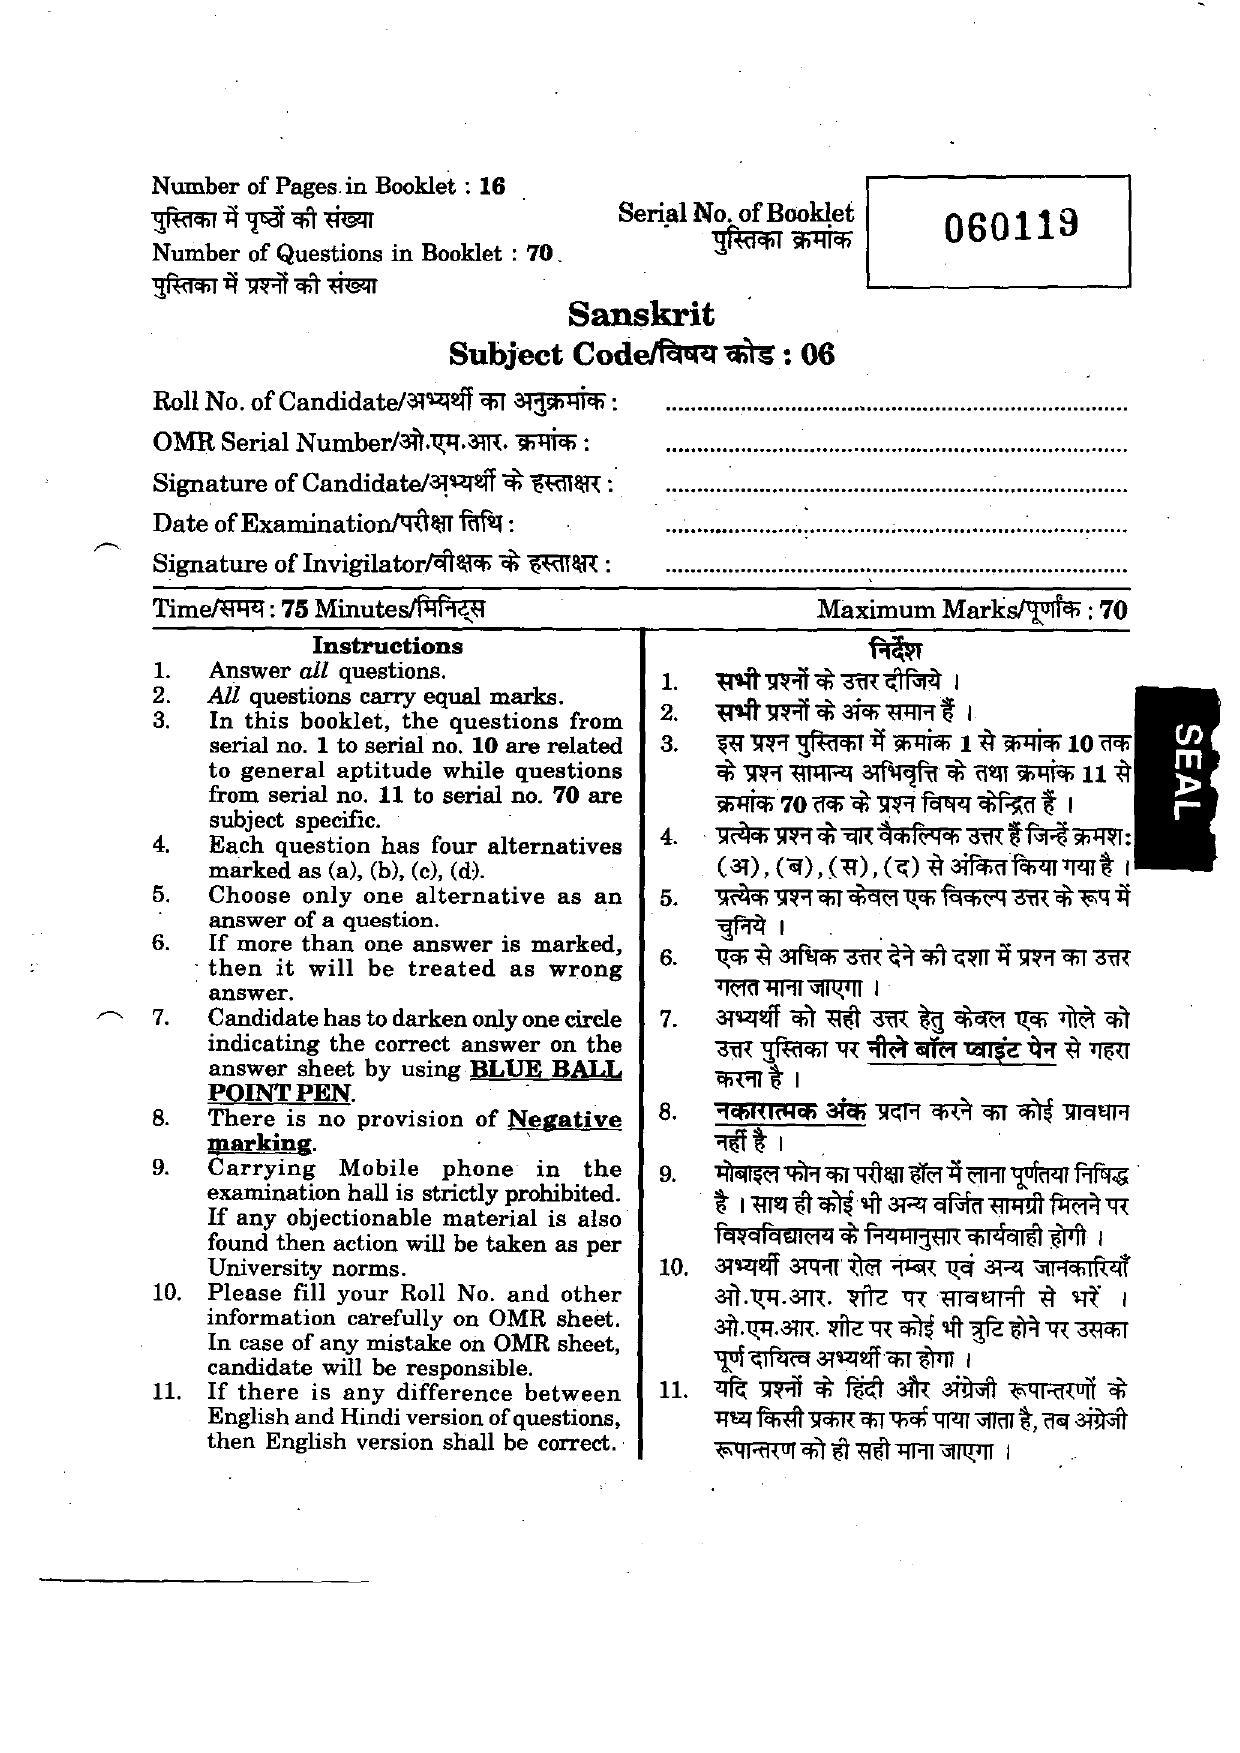 URATPG Sanskrit 2012 Question Paper - Page 1